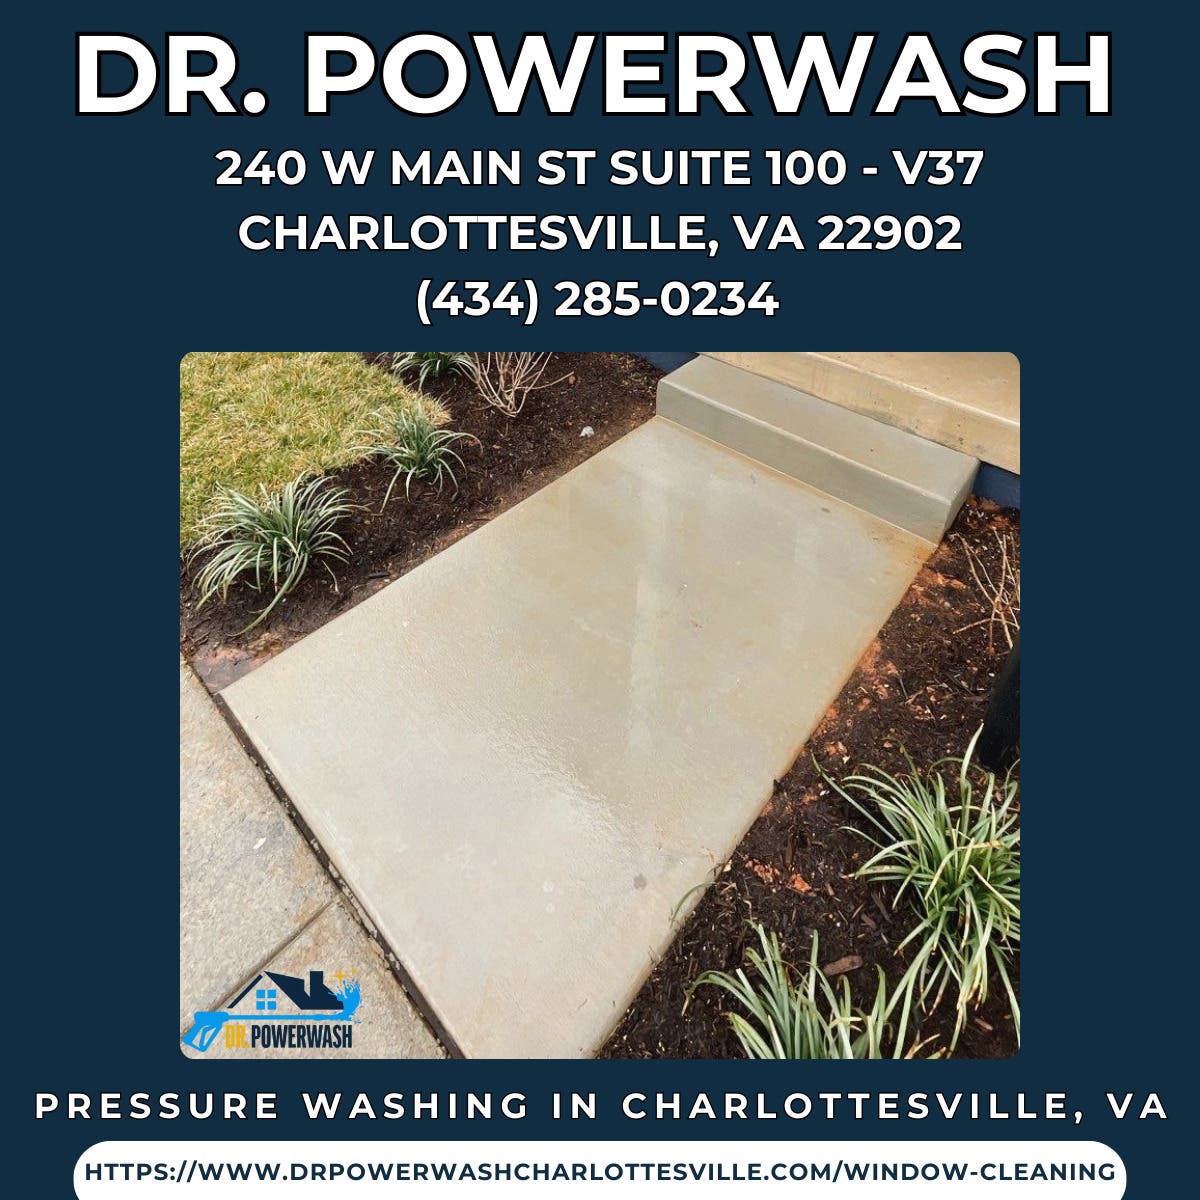 Pressure Washing in Charlottesville, VA - Dr. Powerwash.